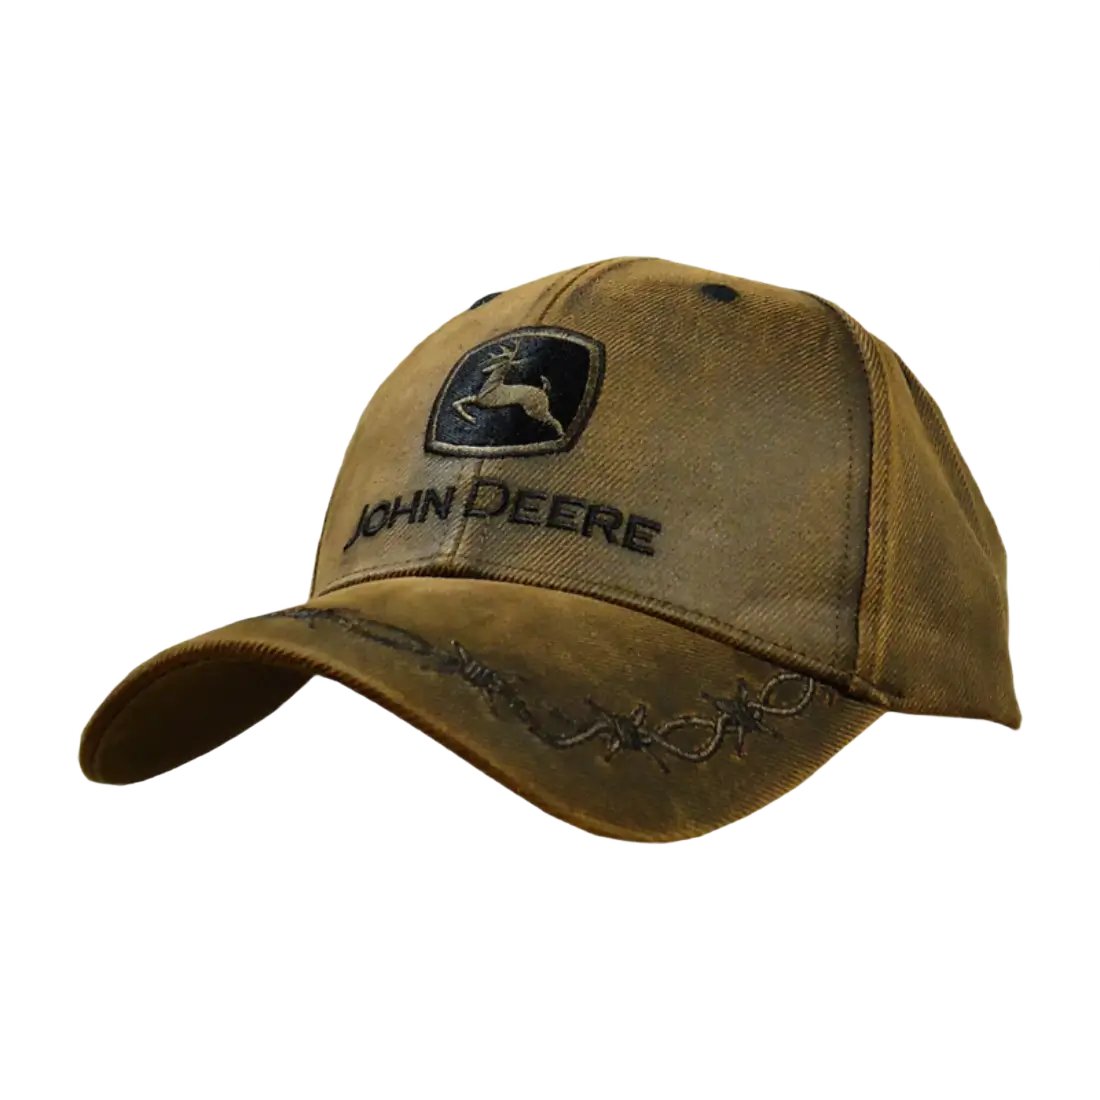 John Deere Brown Cotton Logo Embroidered Cap